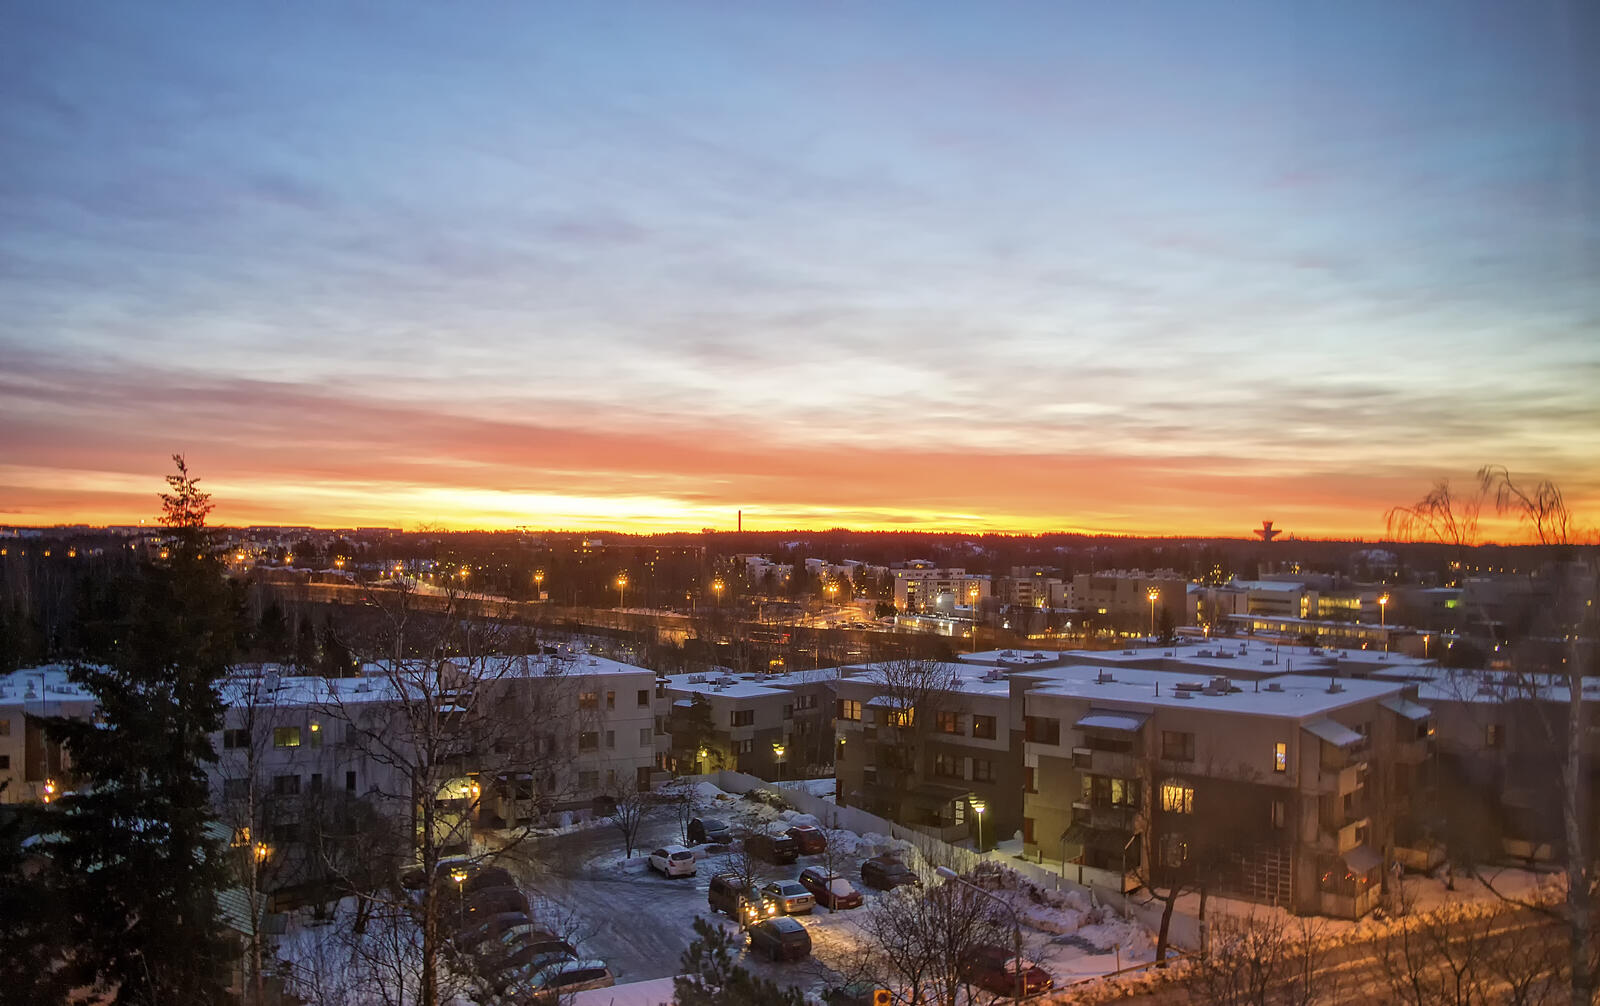 Бесплатное фото Зимний вечерний городок на закате дня